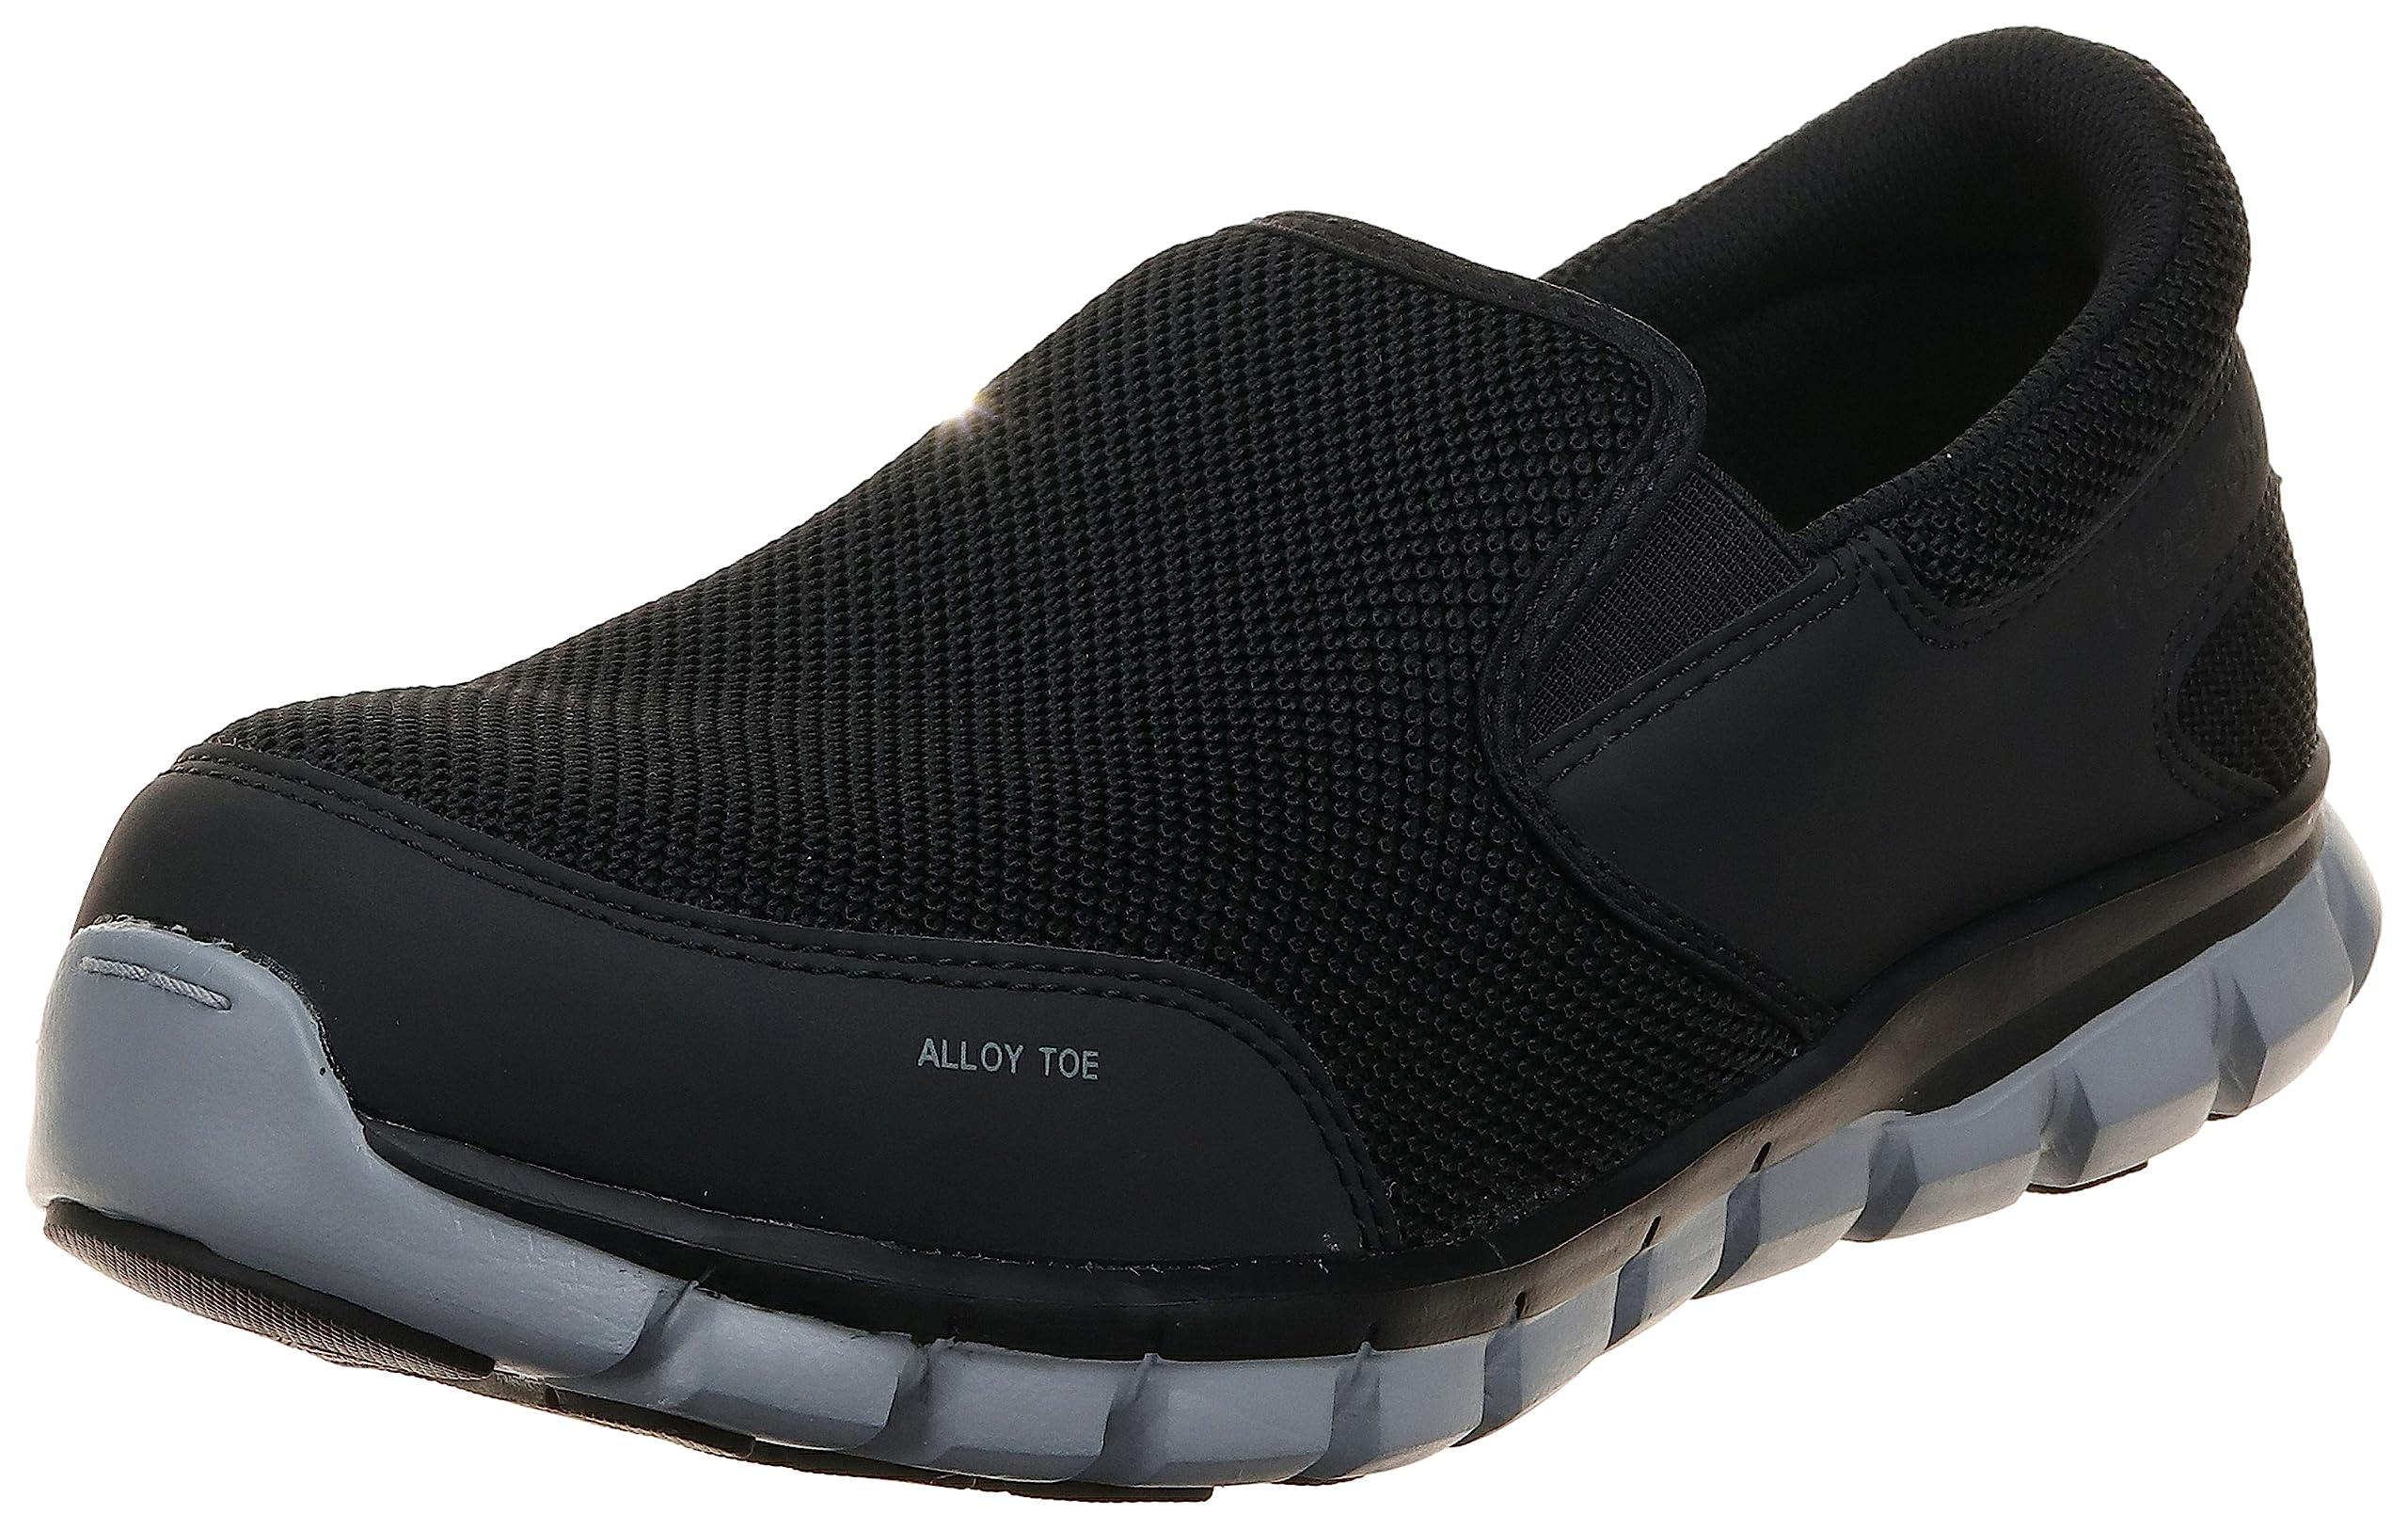 Reebok Men's Sublite Cushion Work Safety Toe Athletic Slip-on Industrial & Construction Shoe